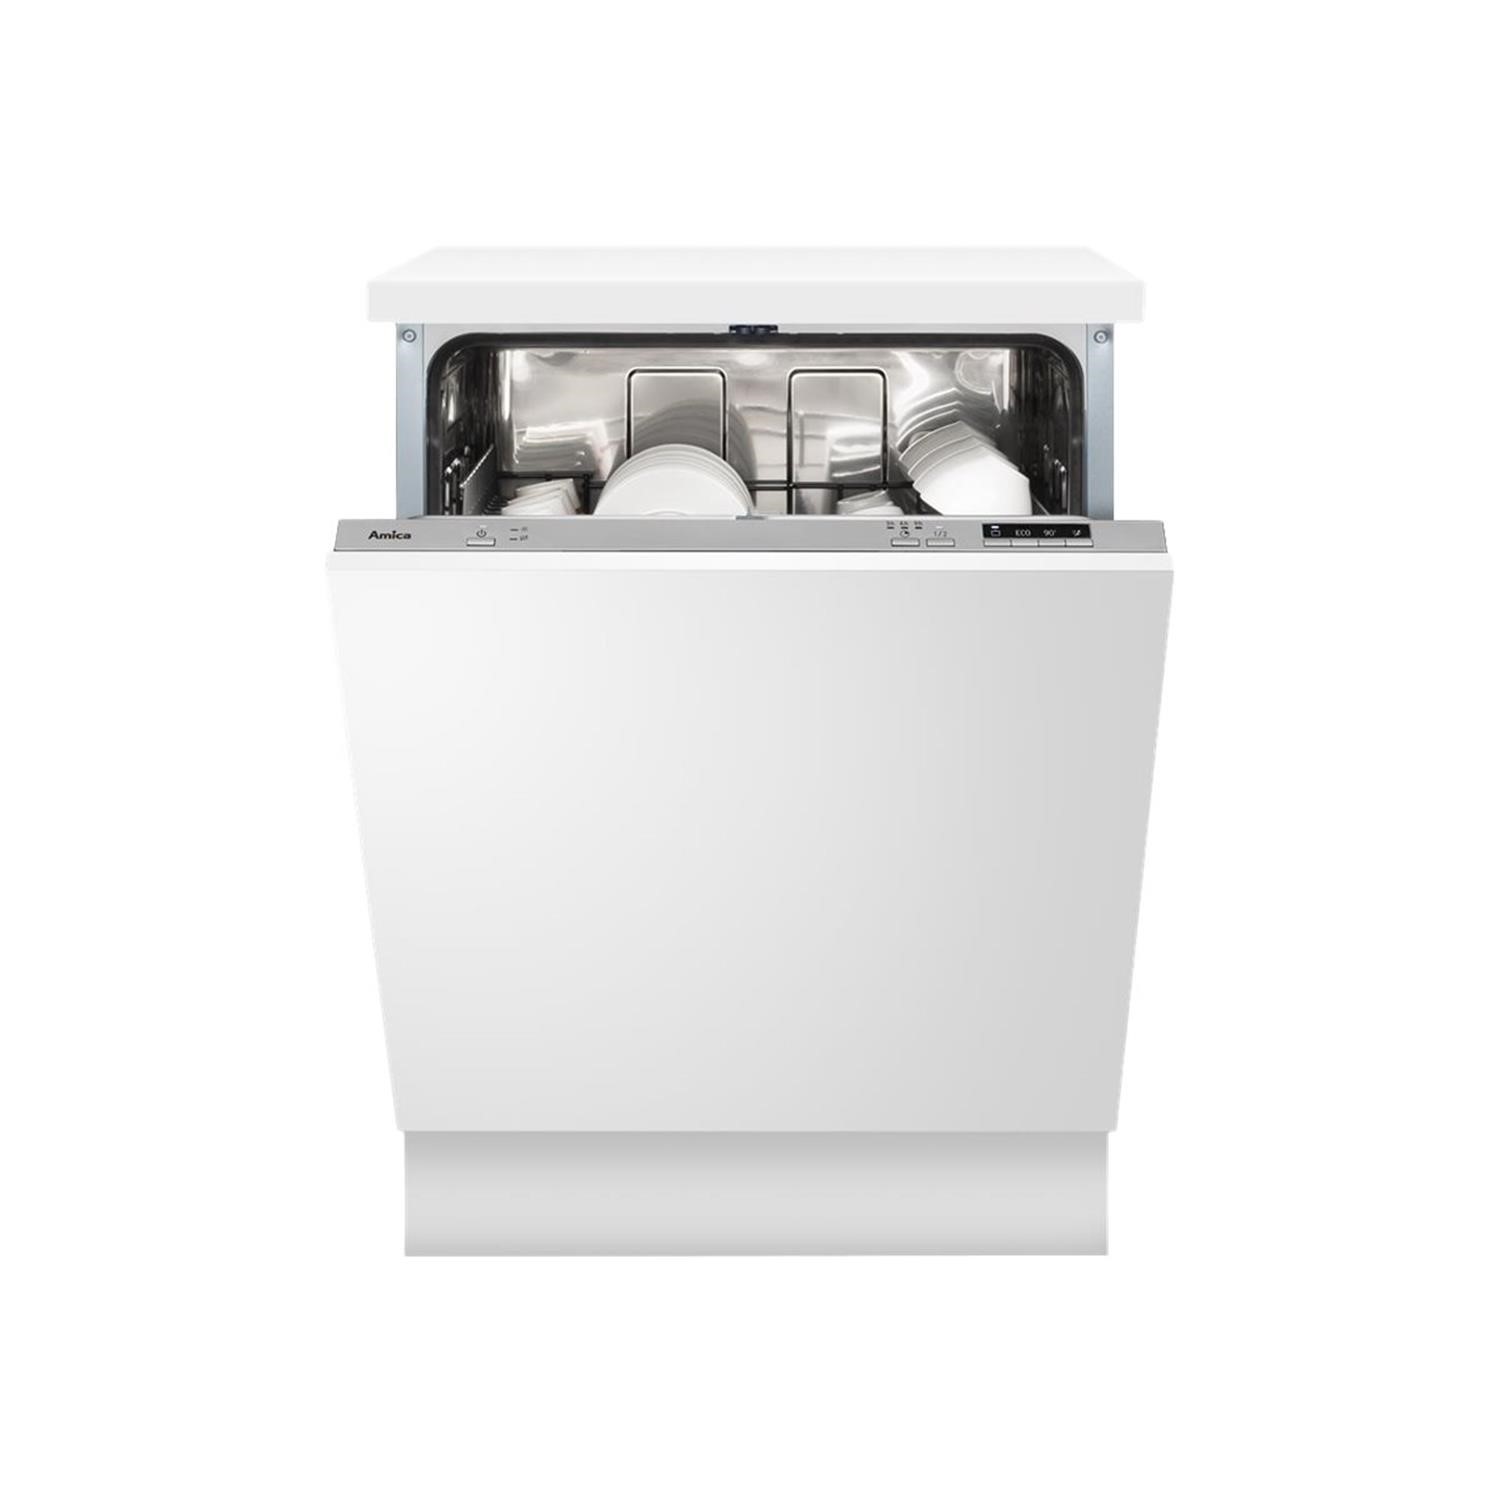 Refurbished AmicaADI630 13 Place Fully Integrated Dishwasher